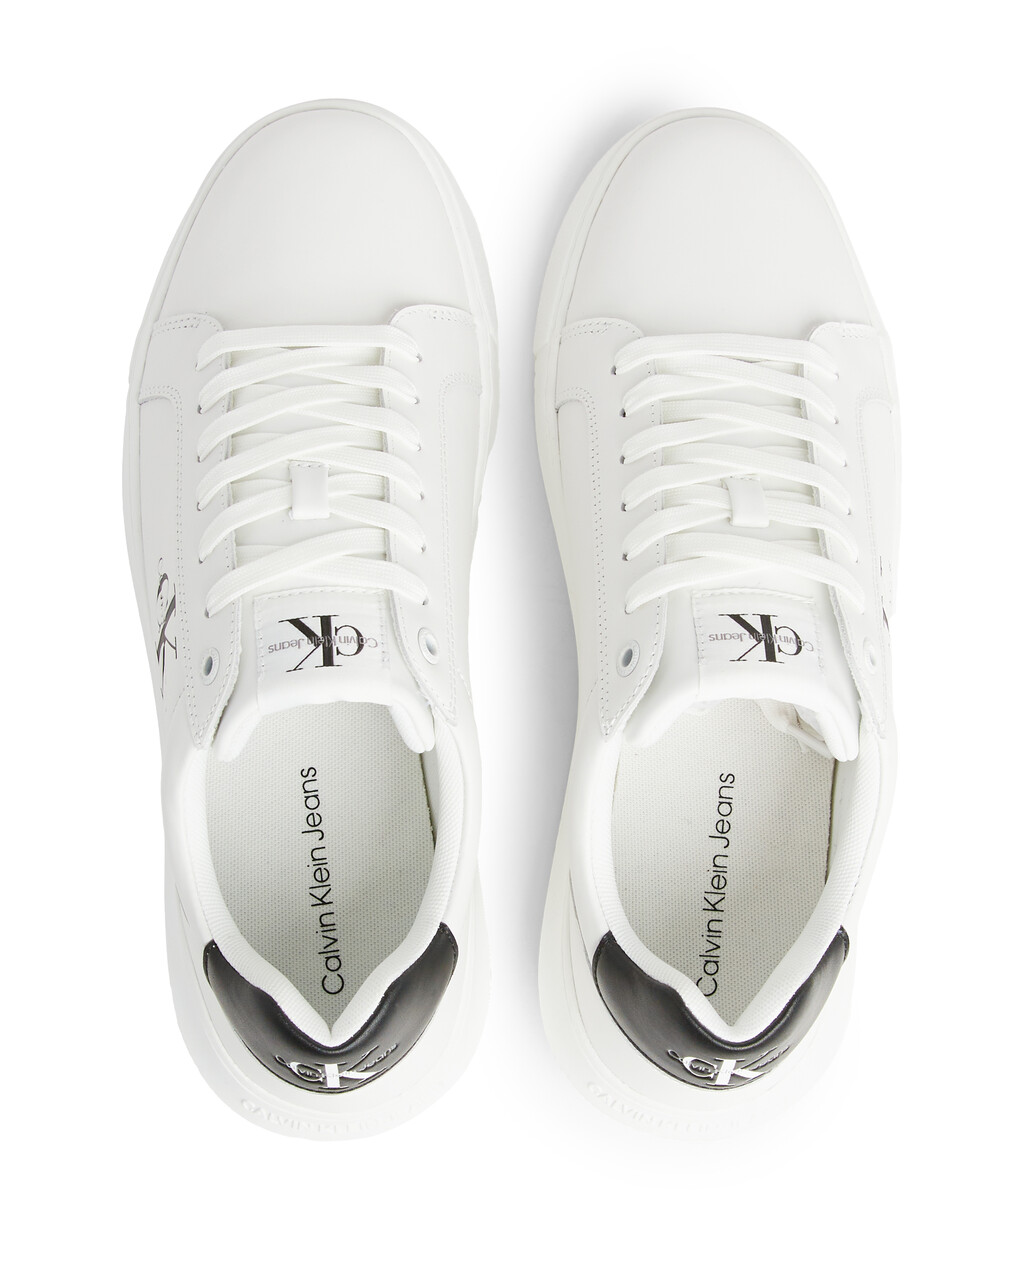 皮革運動鞋, White/Black, hi-res